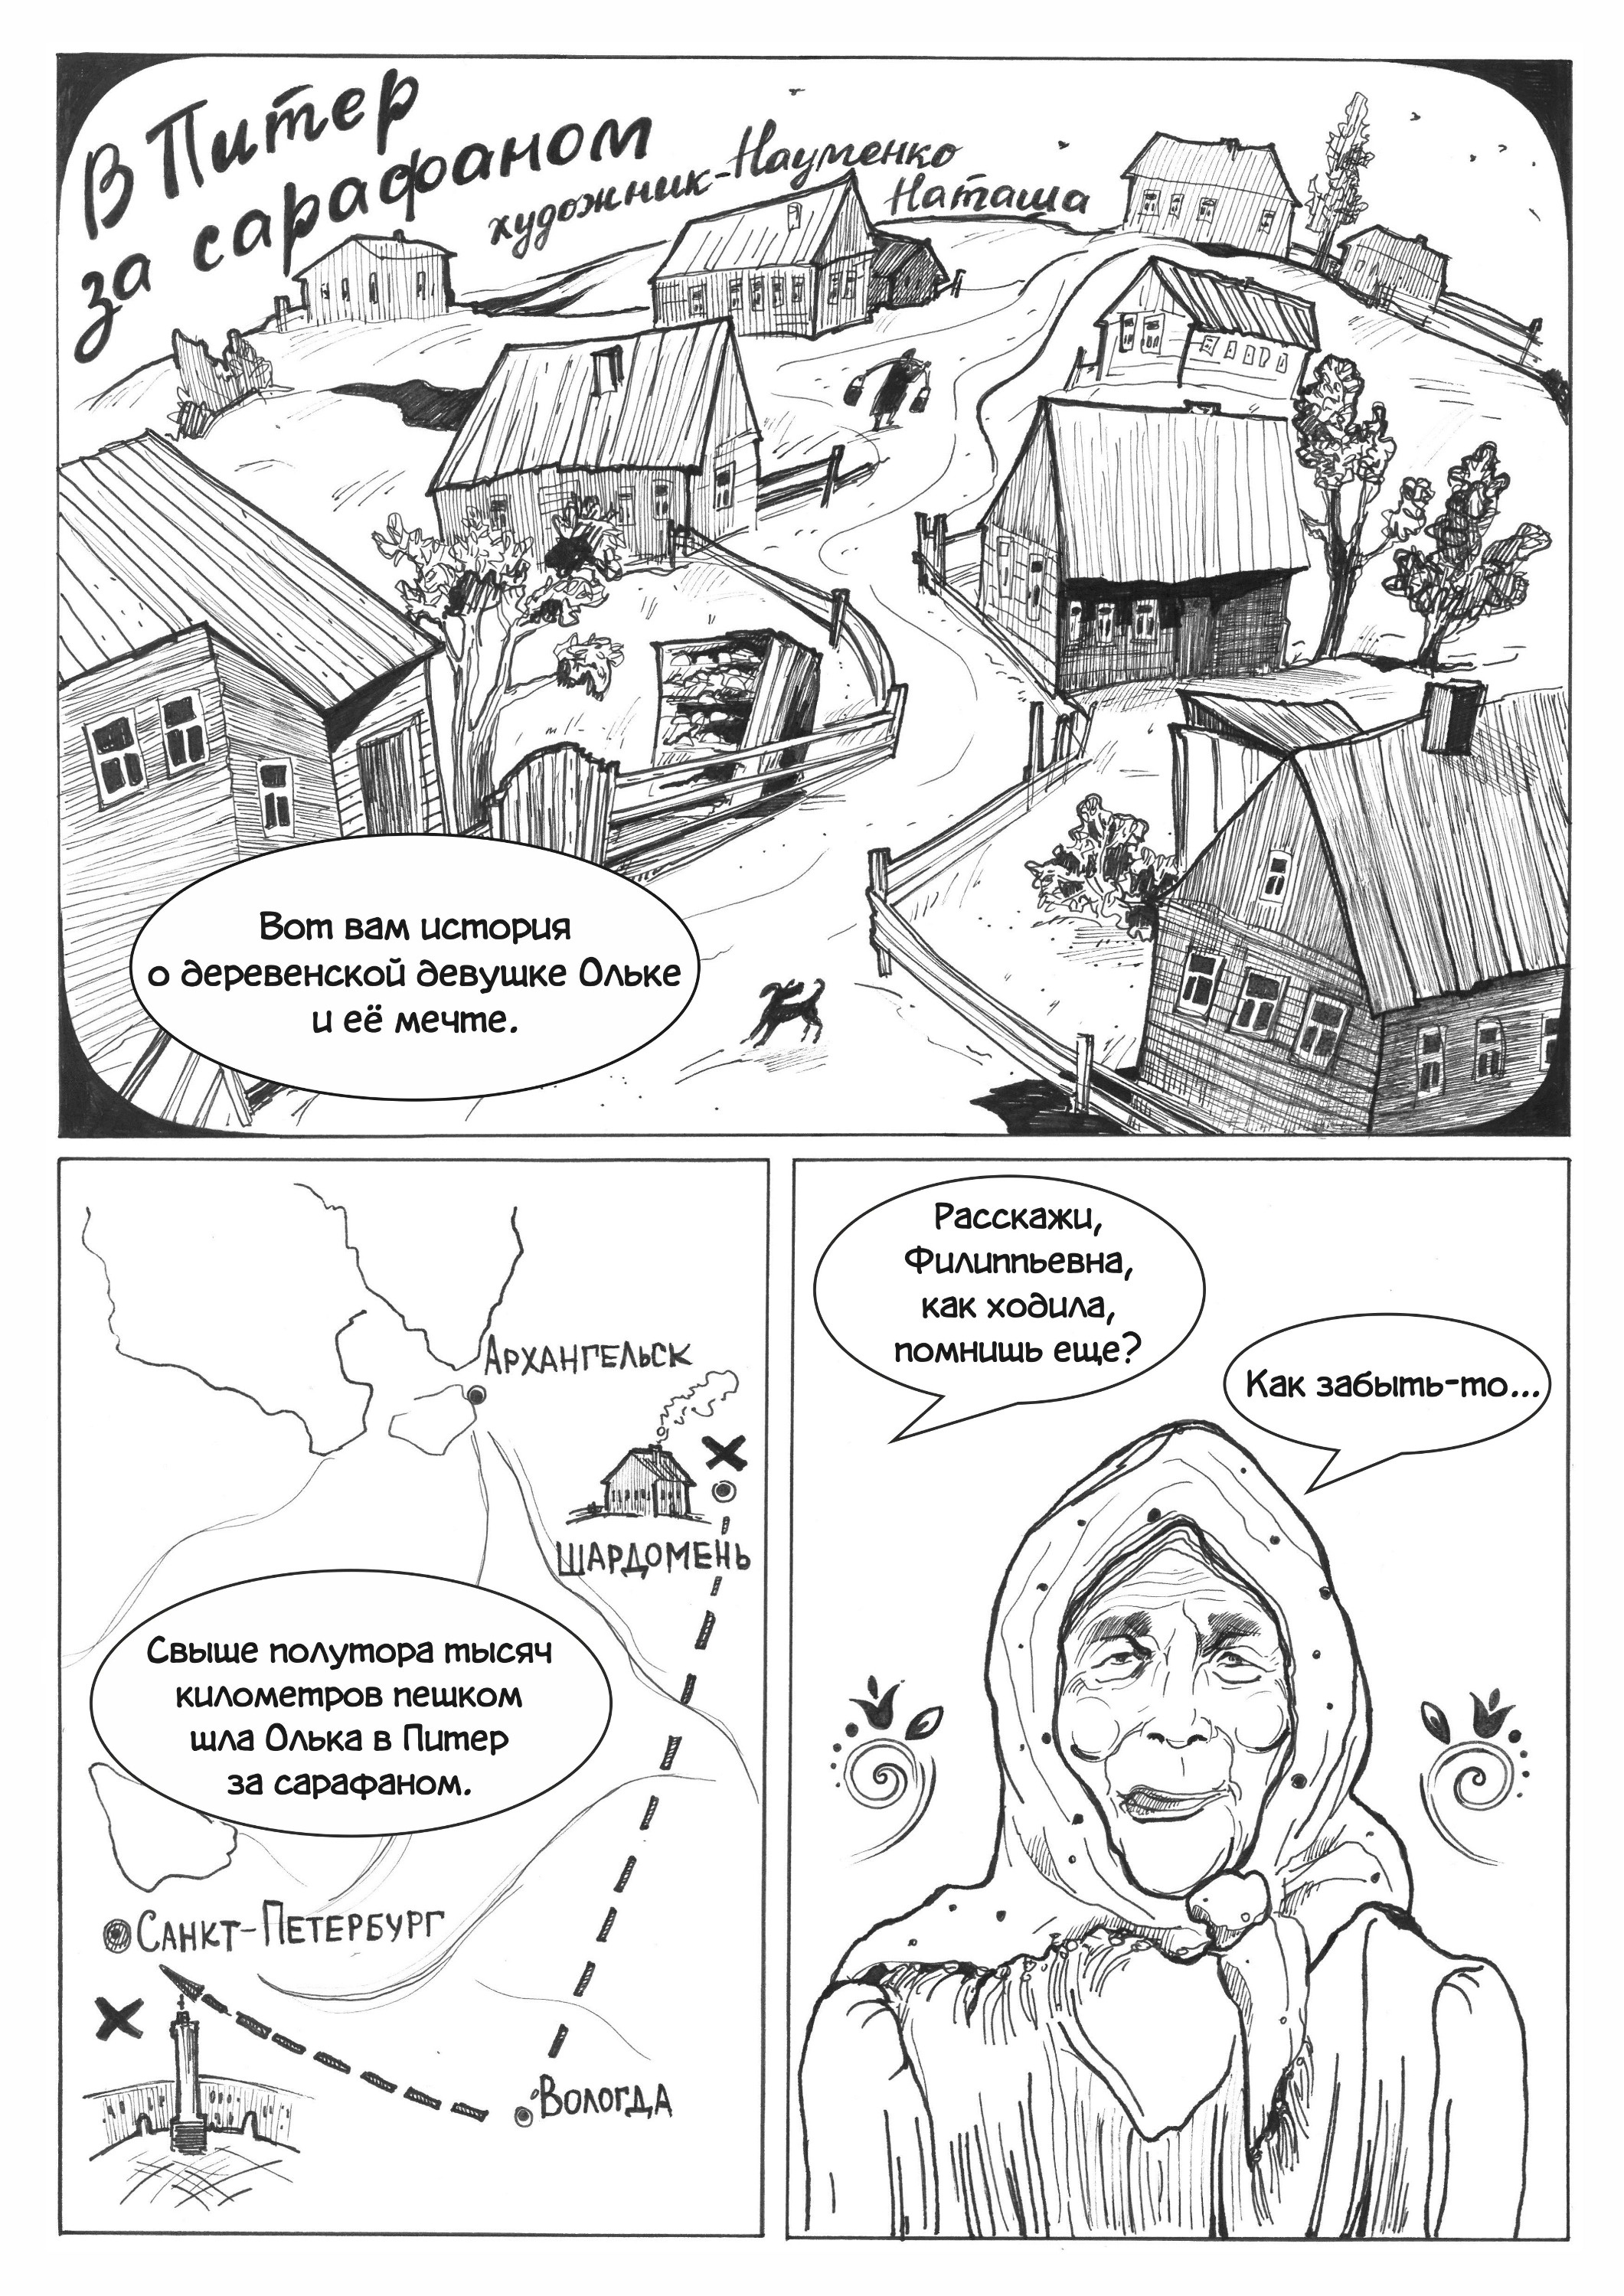 Фрагмент комикса «В Питер за сарафаном»